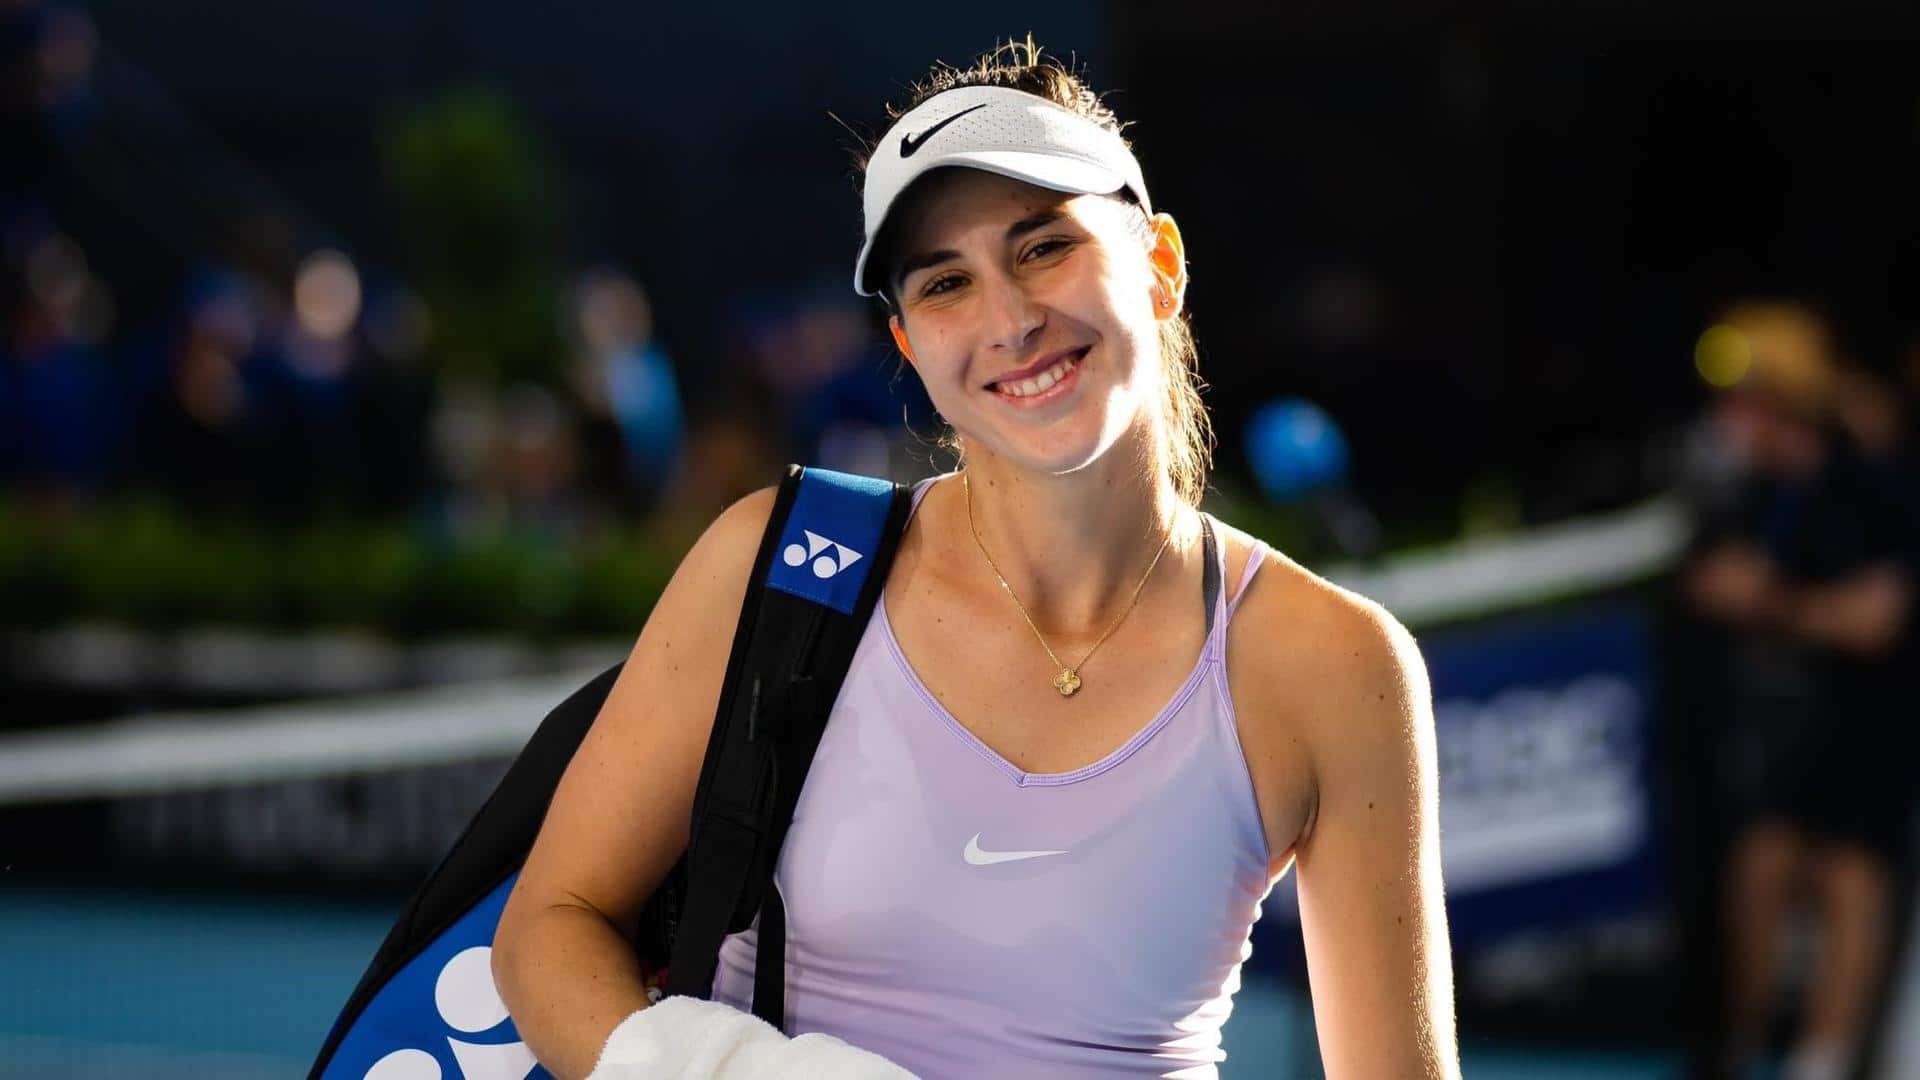 Abu Dhabi Open 2023, Belinda Bencic reaches quarters: Key stats